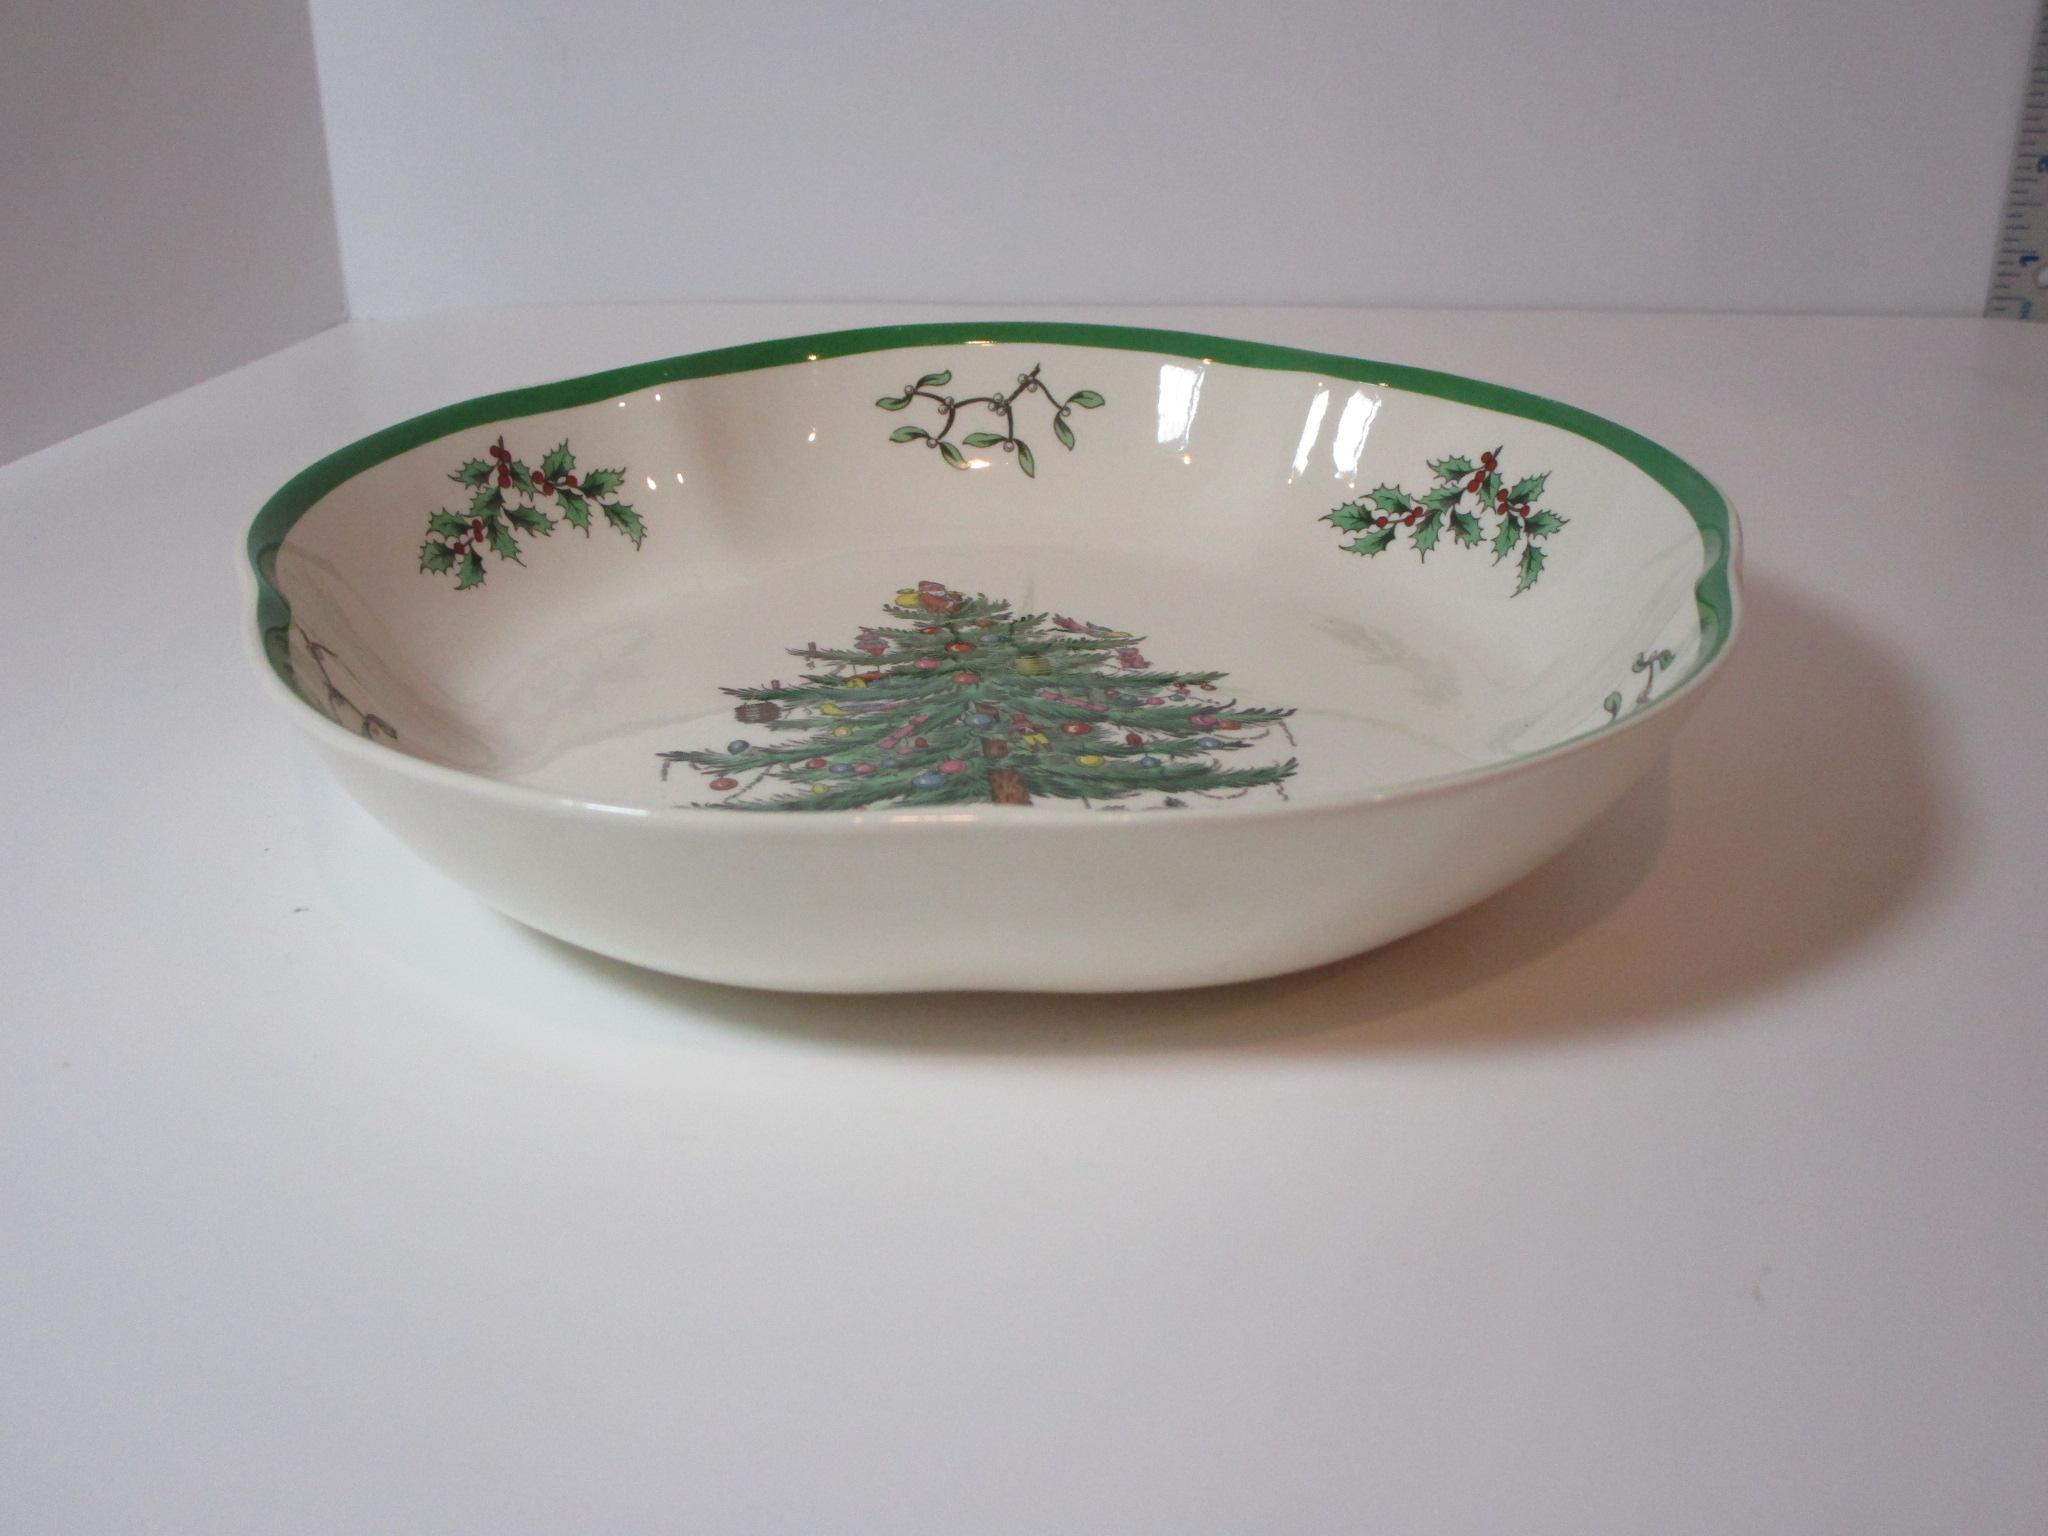 Spode "Christmas Tree" - 8 1/2" Vegetable Bowl